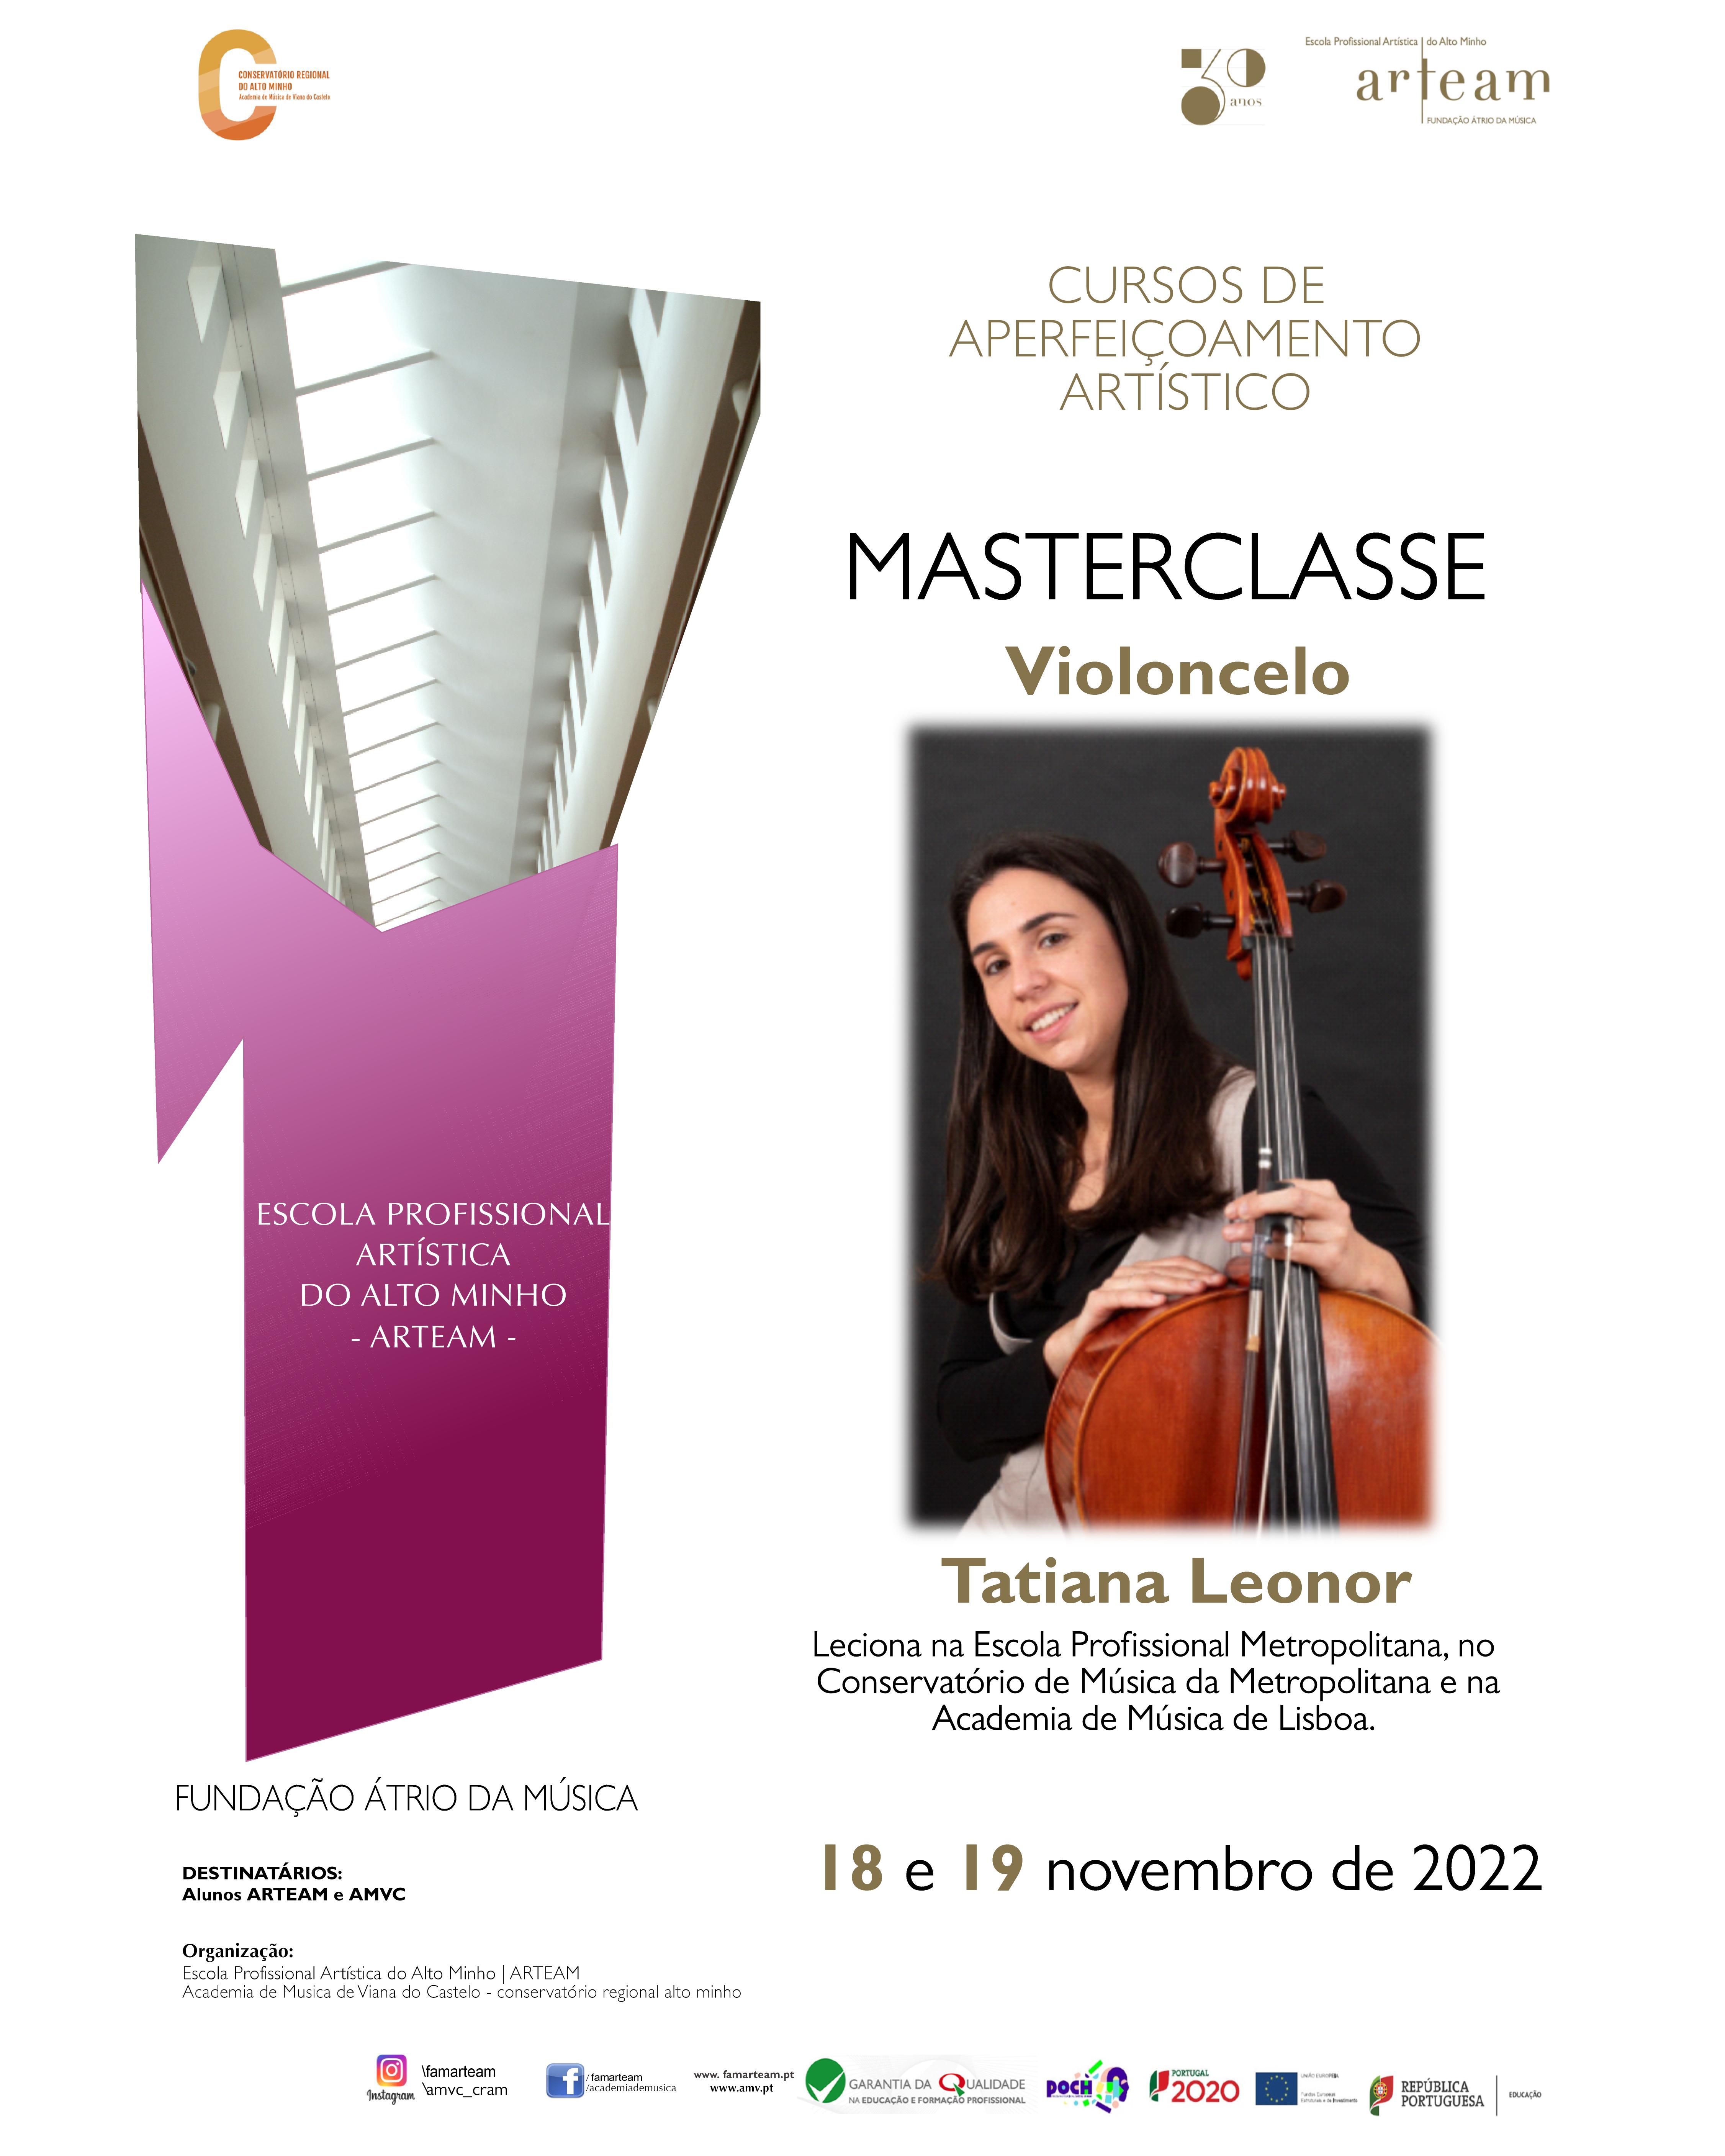 Masterclasse de Violoncelo por Tatiana Leonor